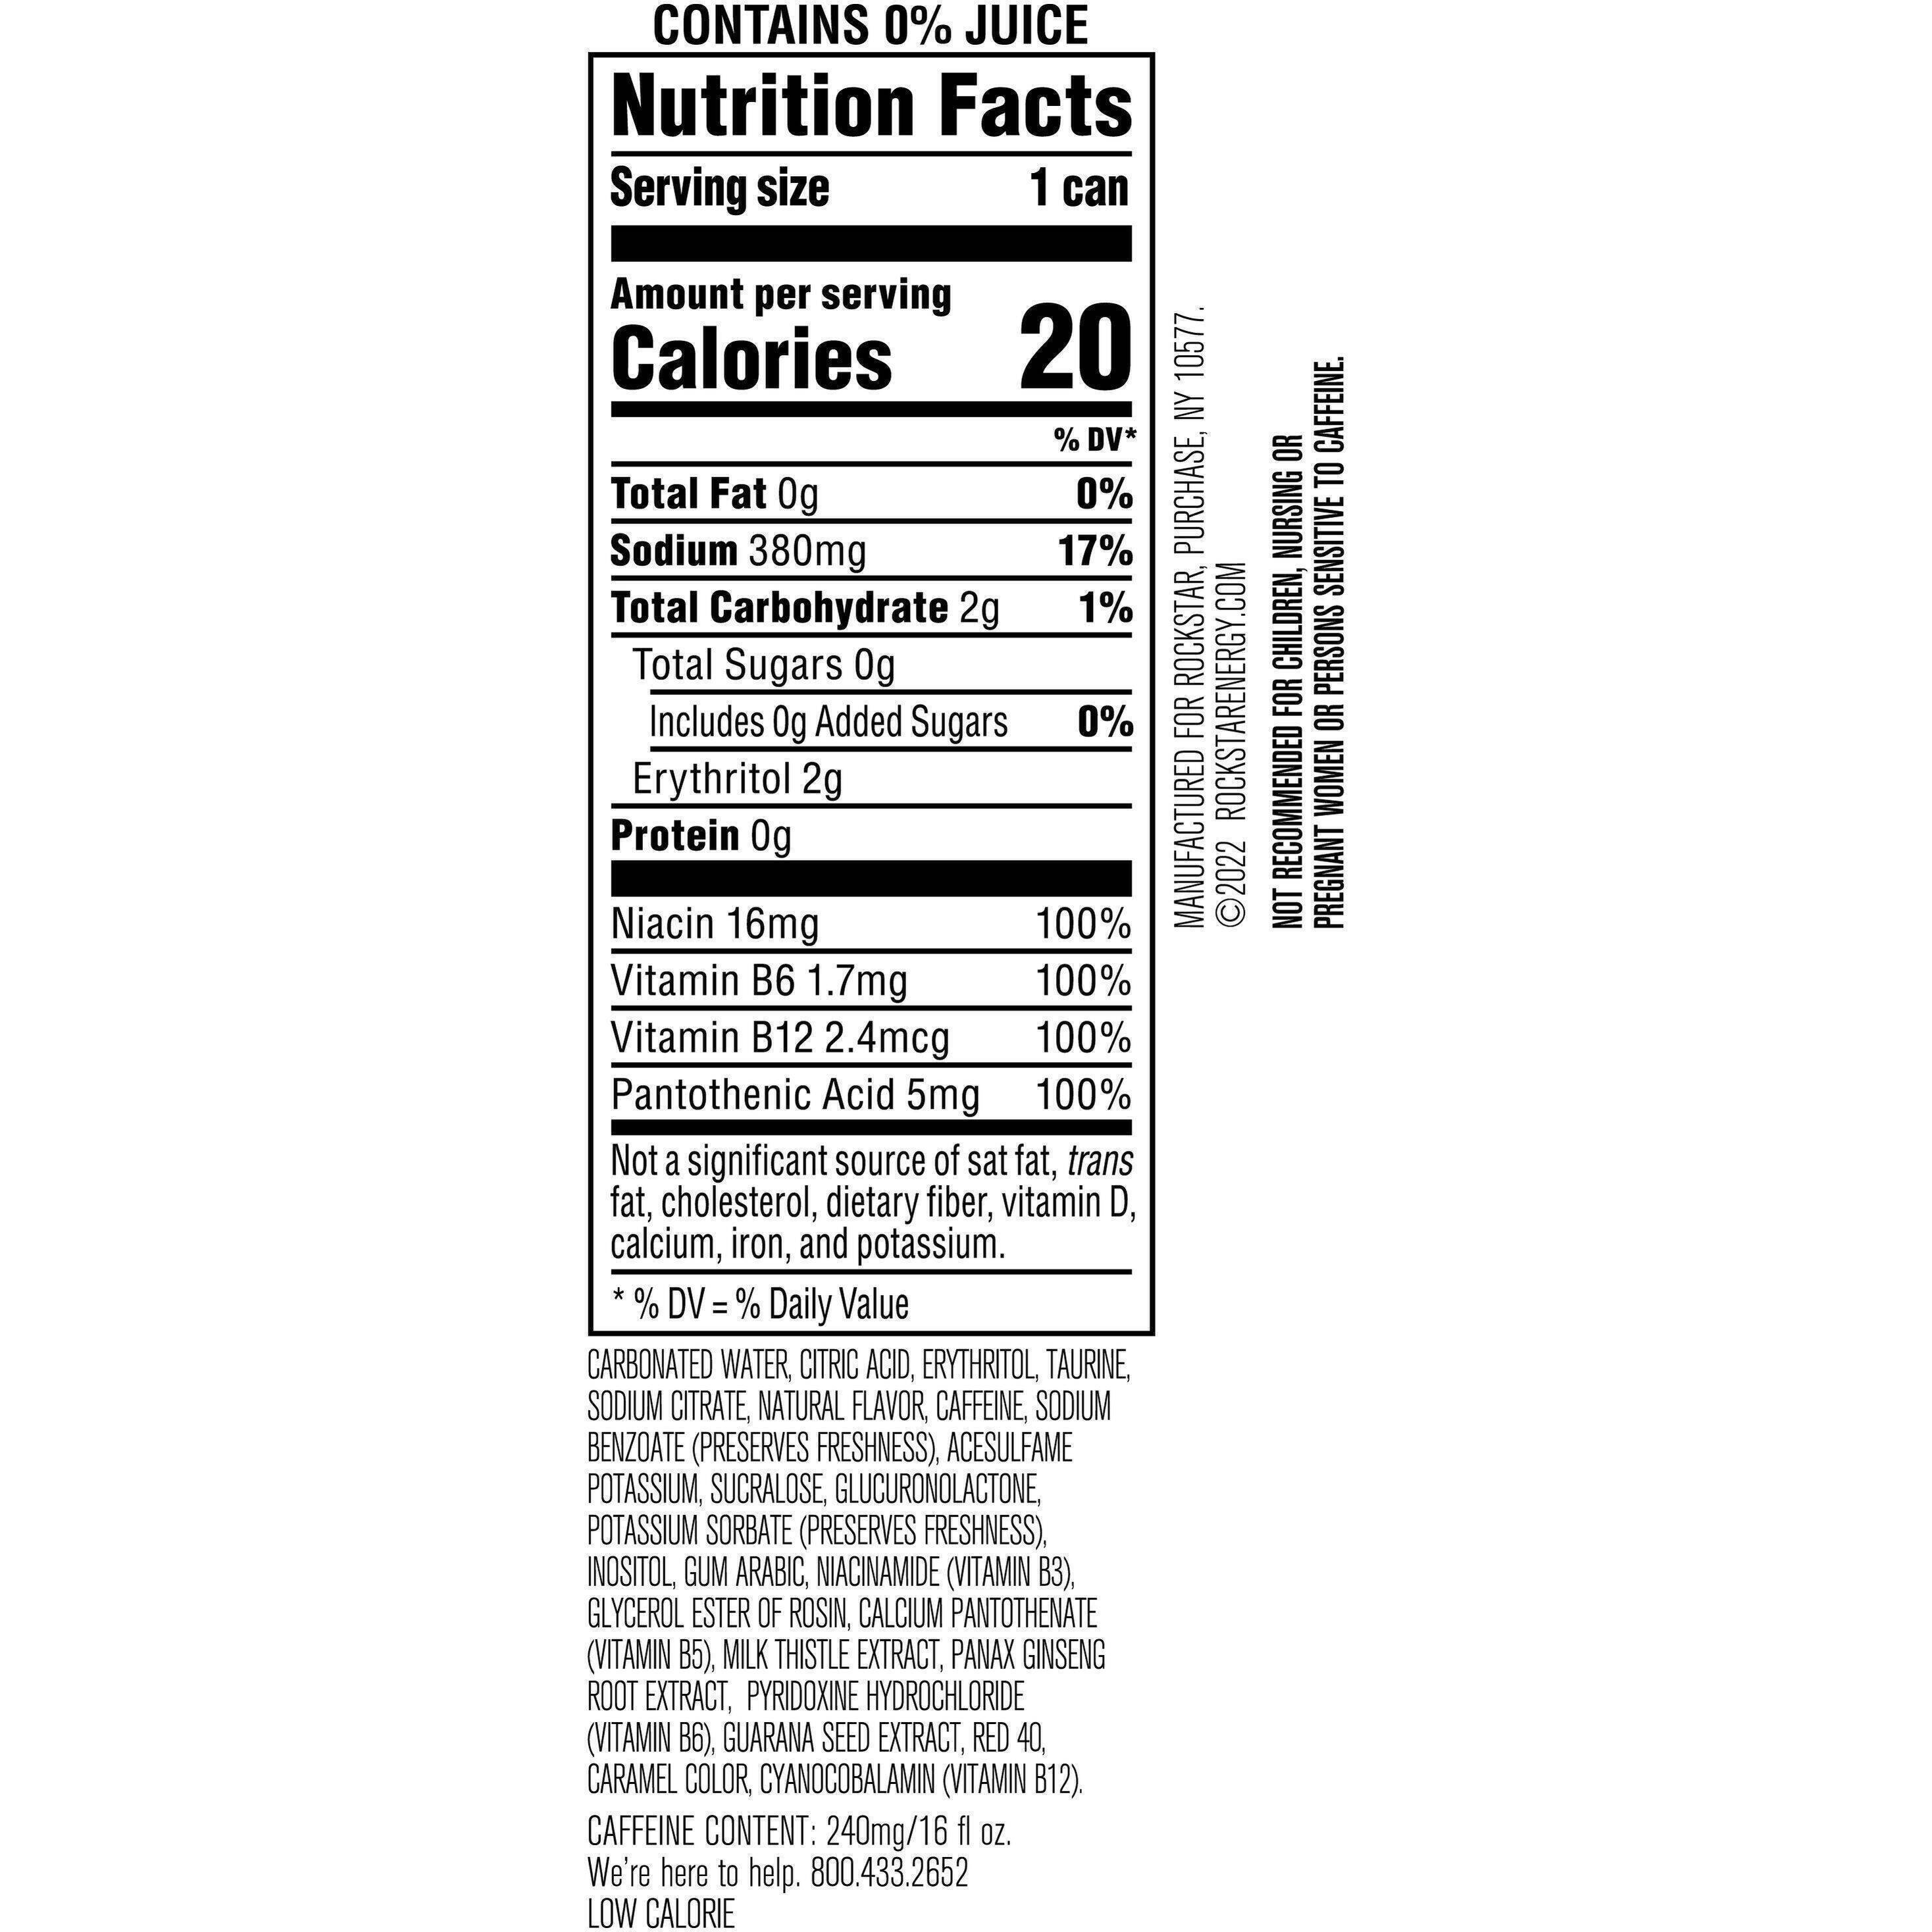 Image describing nutrition information for product Rockstar Pure Zero Tangerine Mango Guava Strawberry